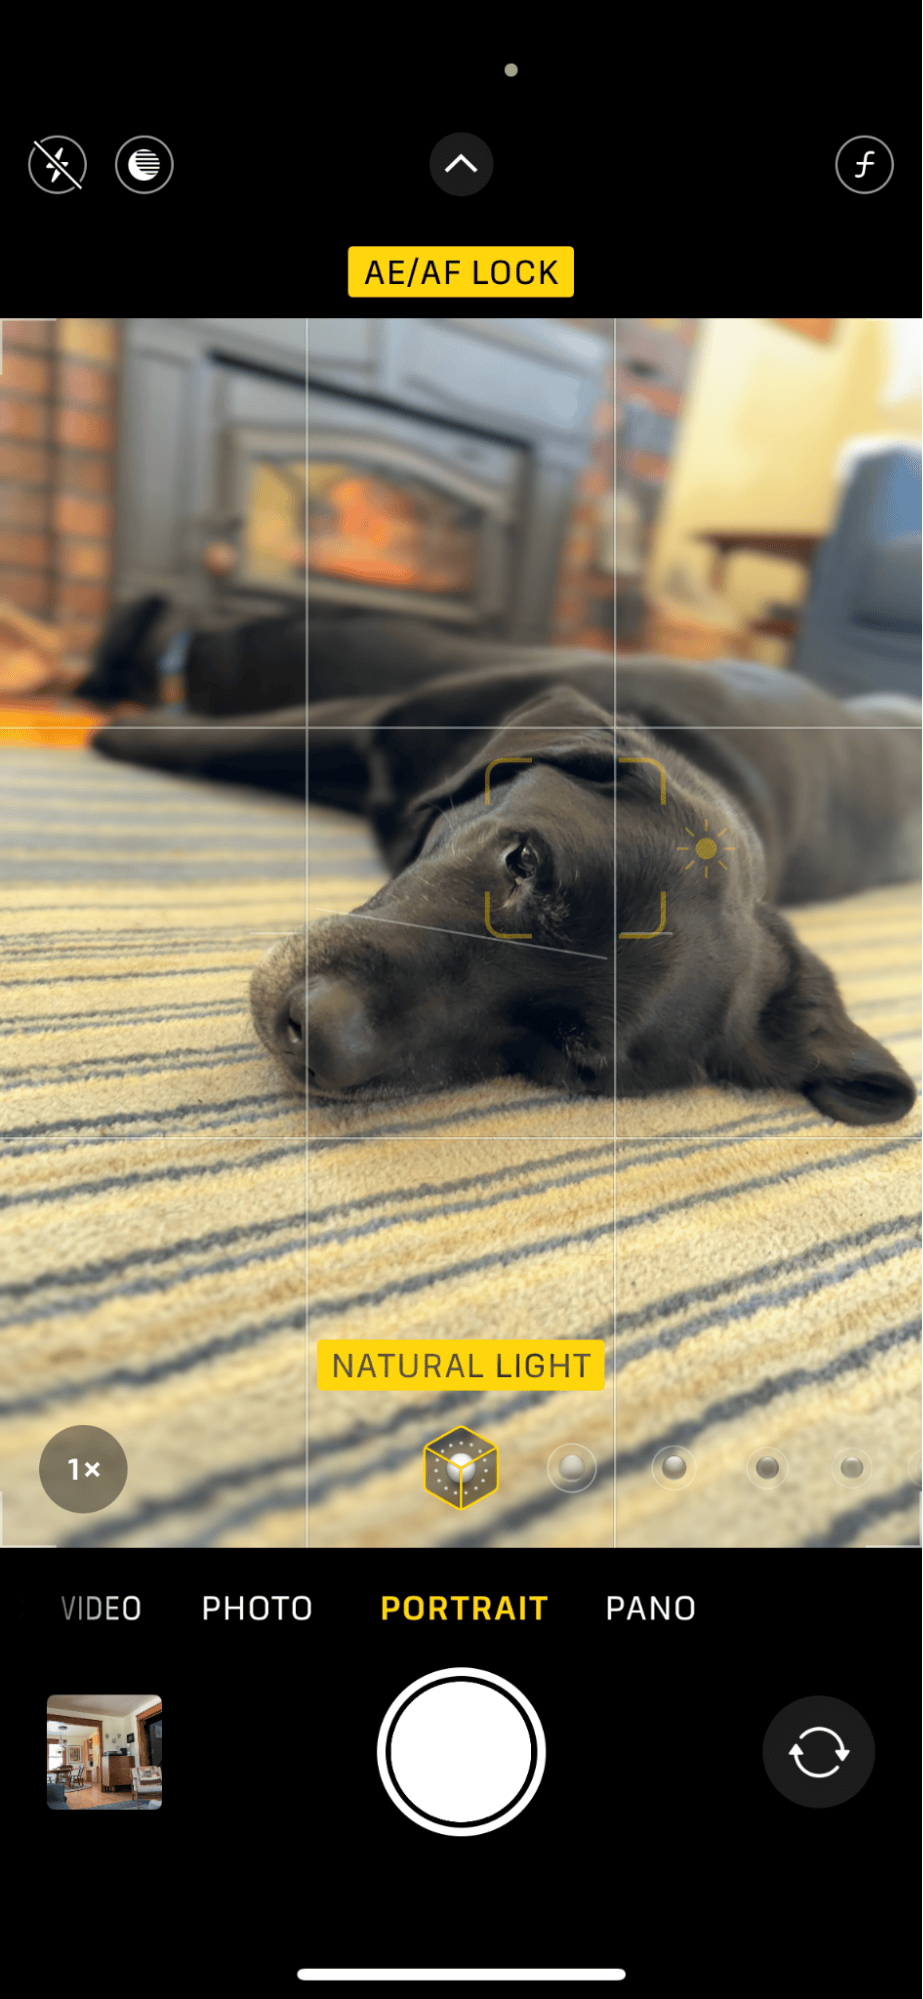 shooting mode on iPhone camera – natural light